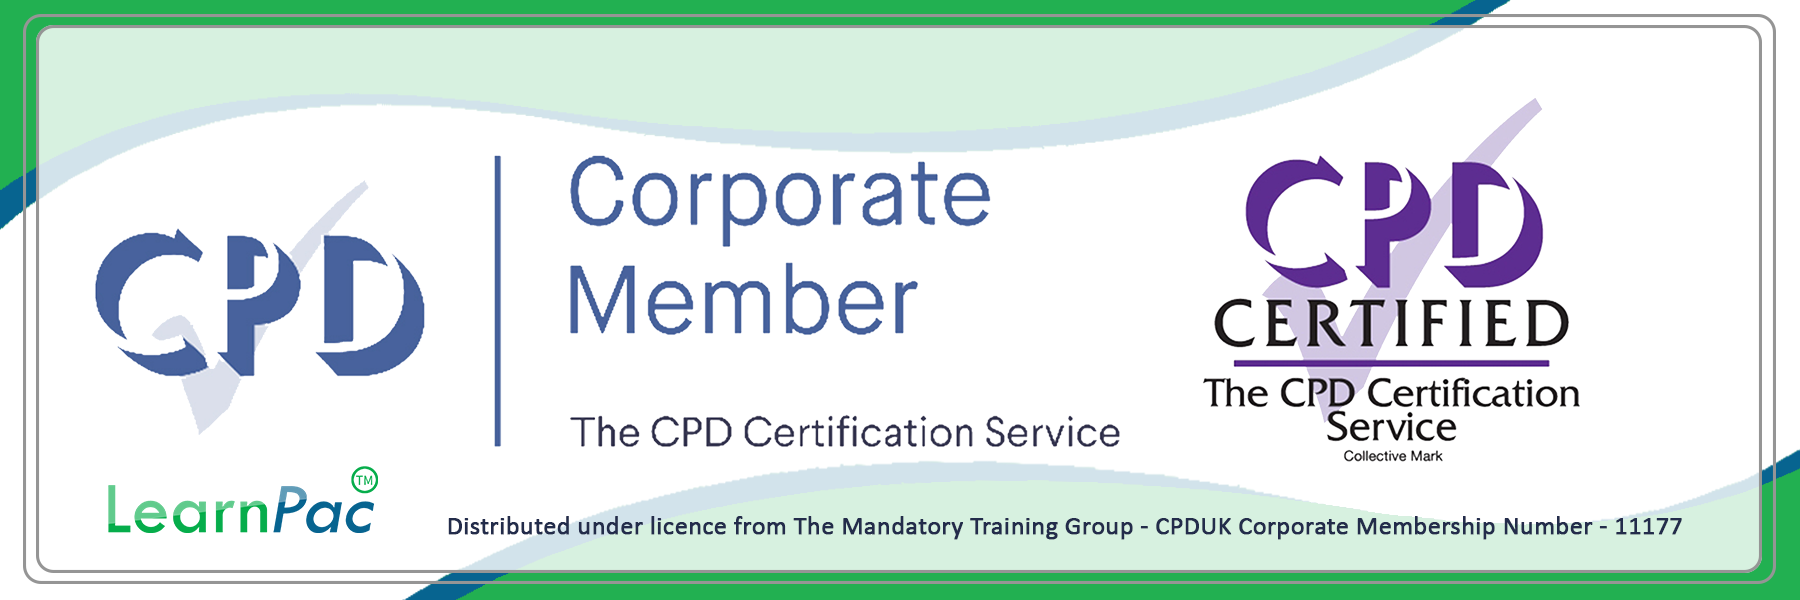 Care Certificate Standard 10 - CPDUK Certified - Learnpac System UK - 